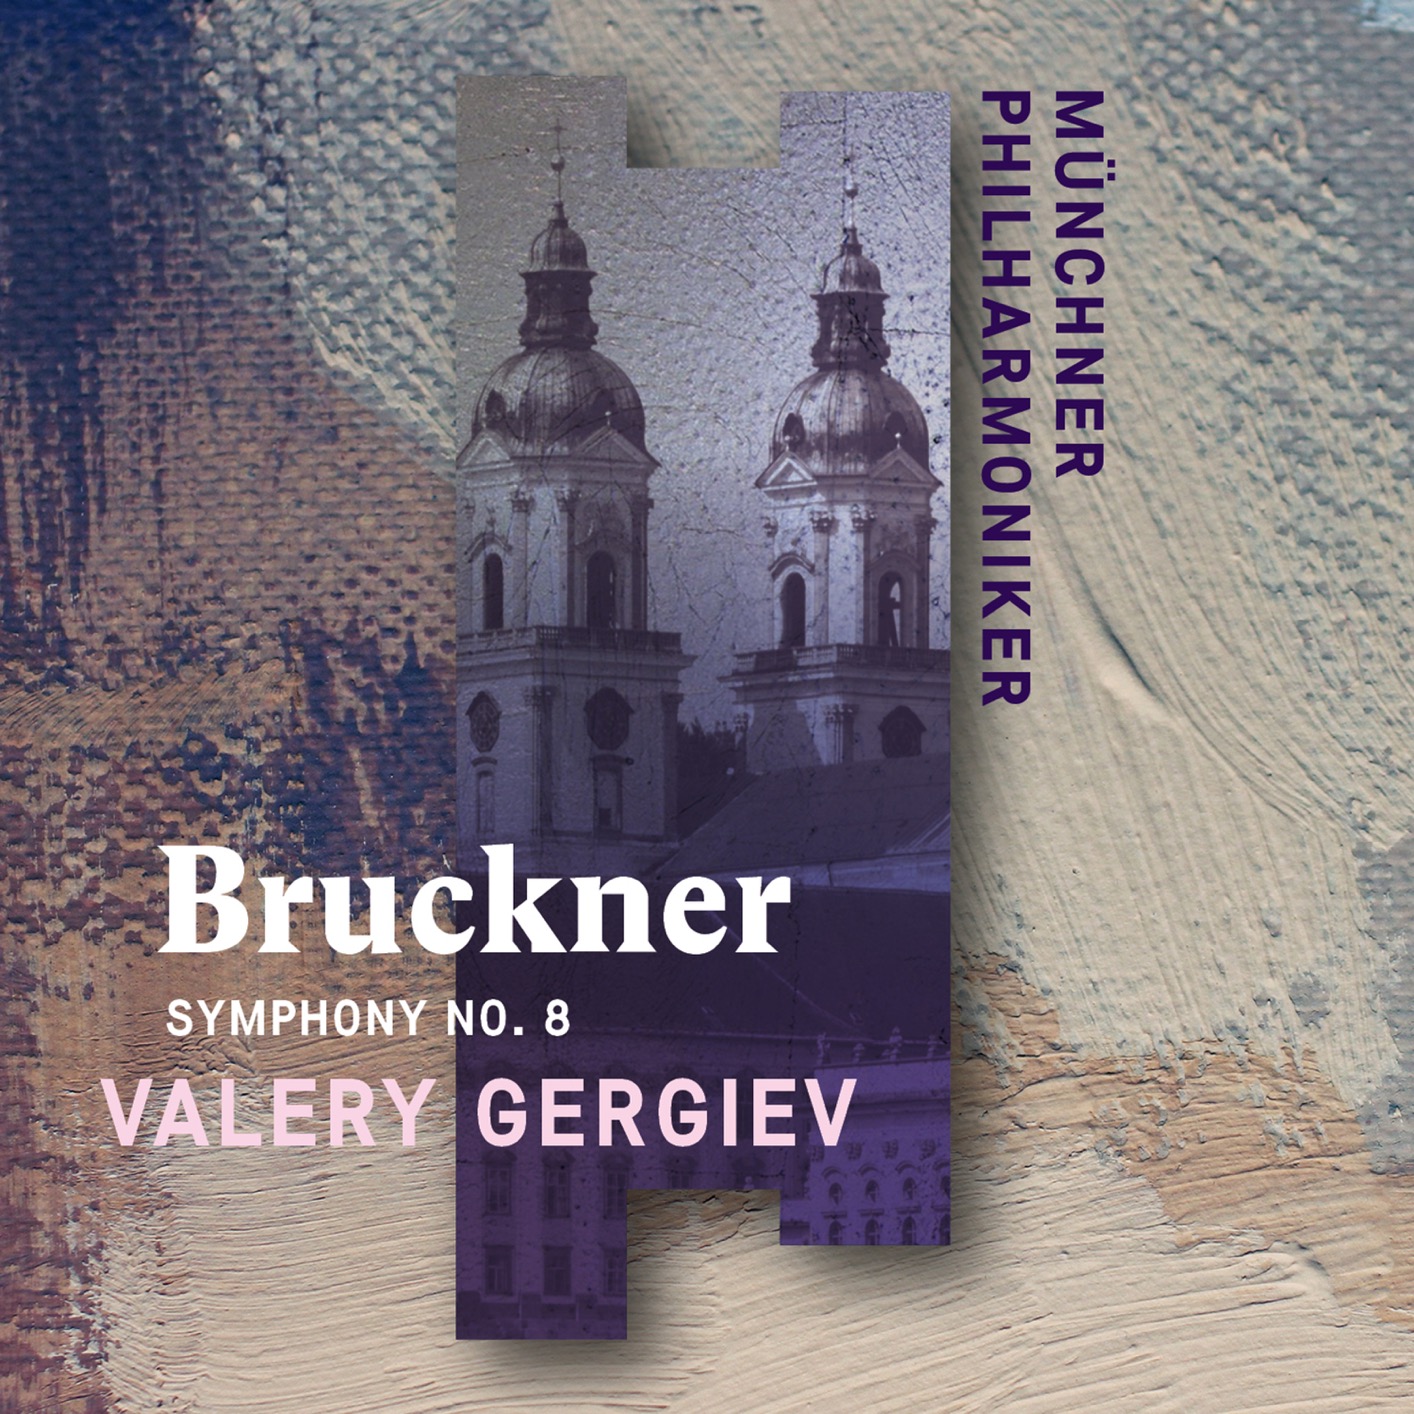 Munchner Philharmoniker & Valery Gergiev – Bruckner: Symphony No. 8 (Live) (2019) [FLAC 24bit/96kHz]